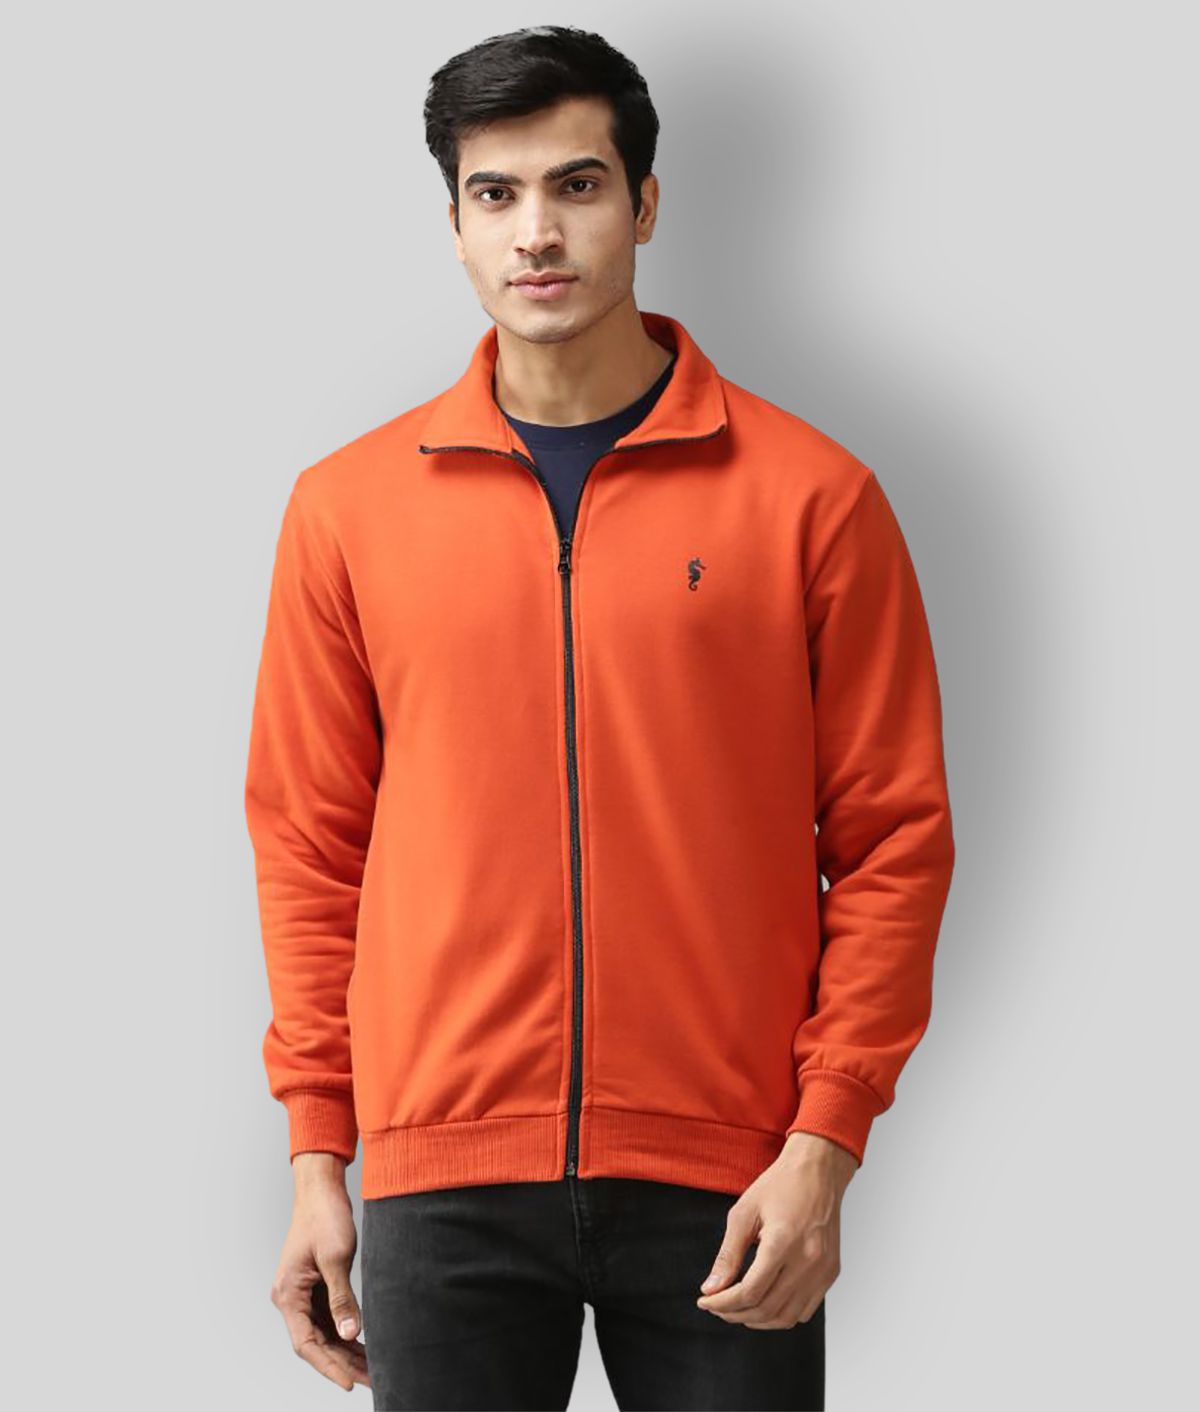 EPPE - Orange Polyester Men's Running Jacket ( Pack of 1 )